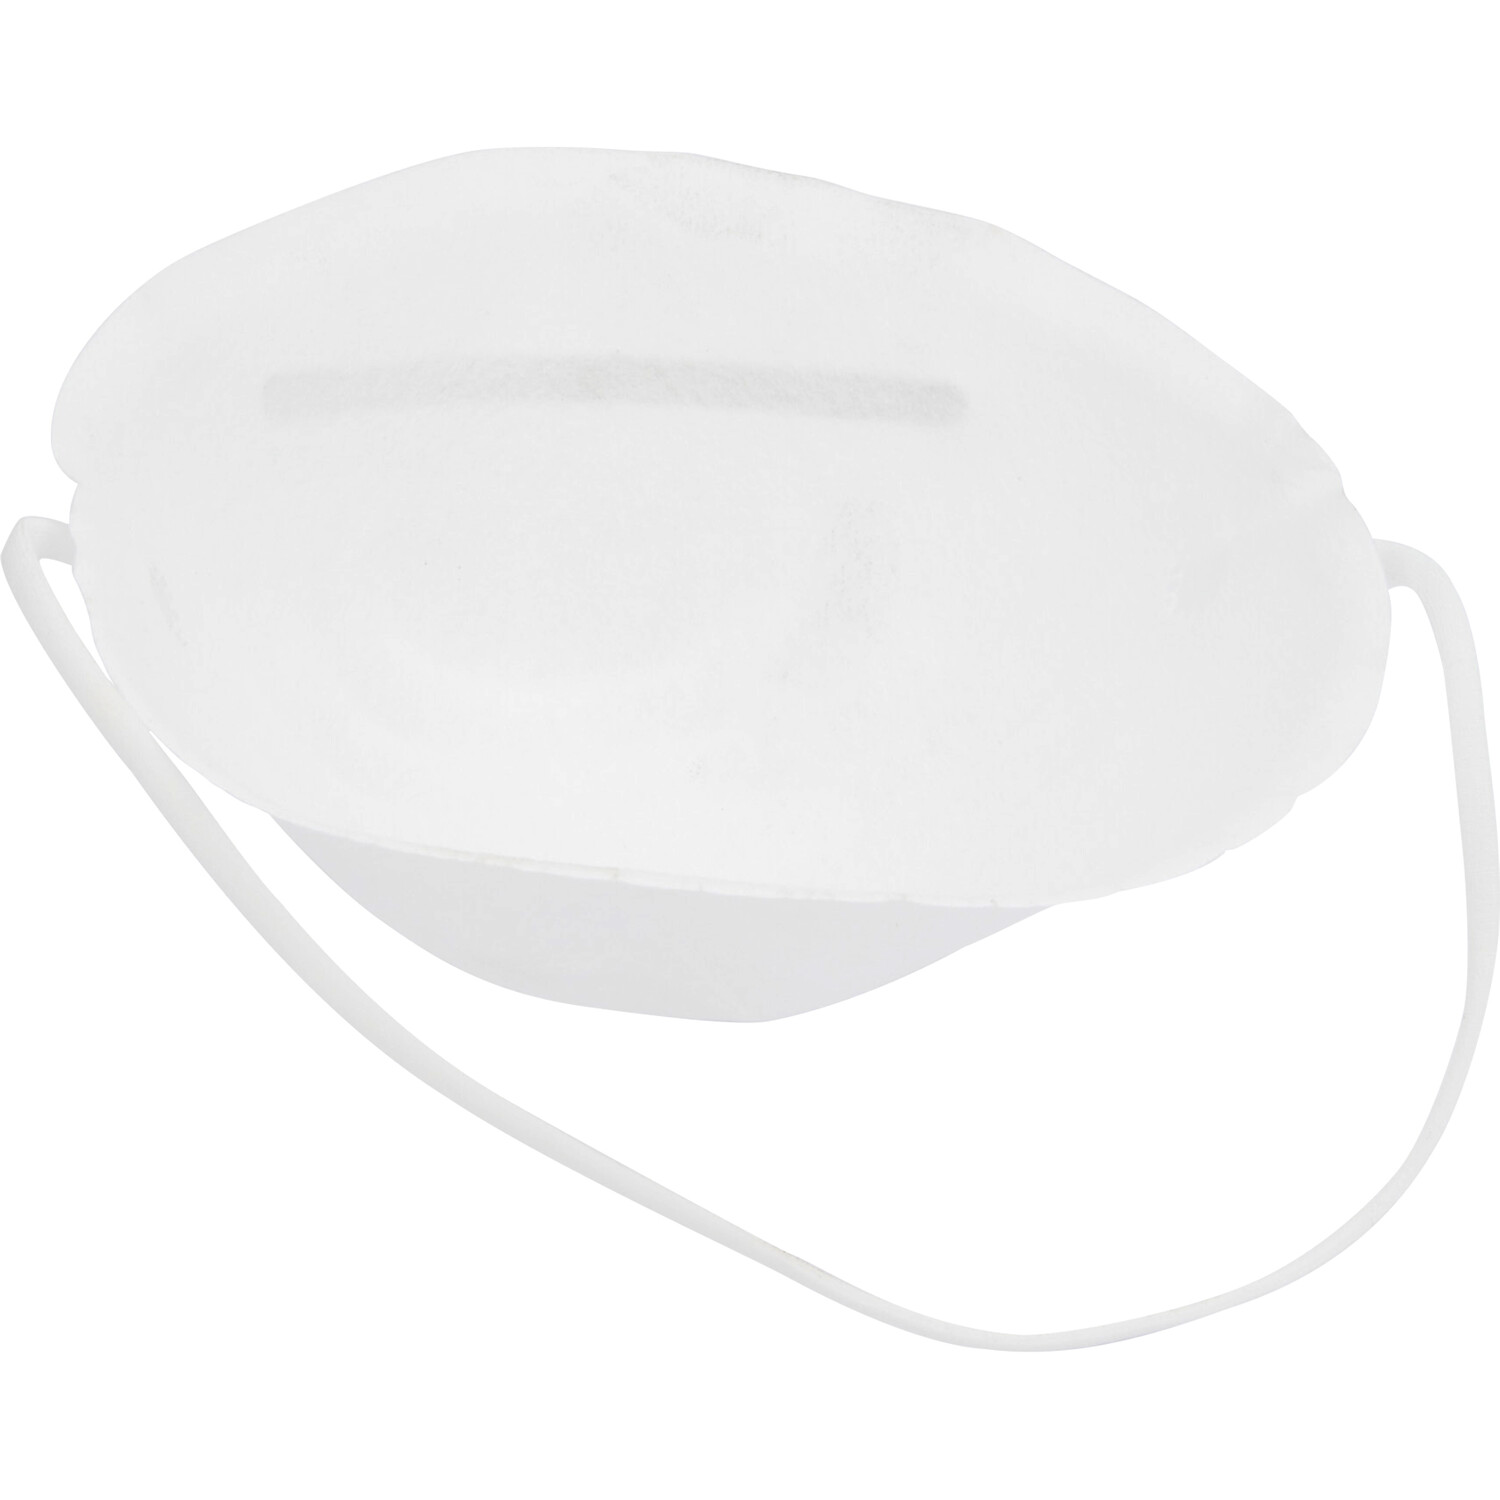 One Layer Dust Masks - White Image 4